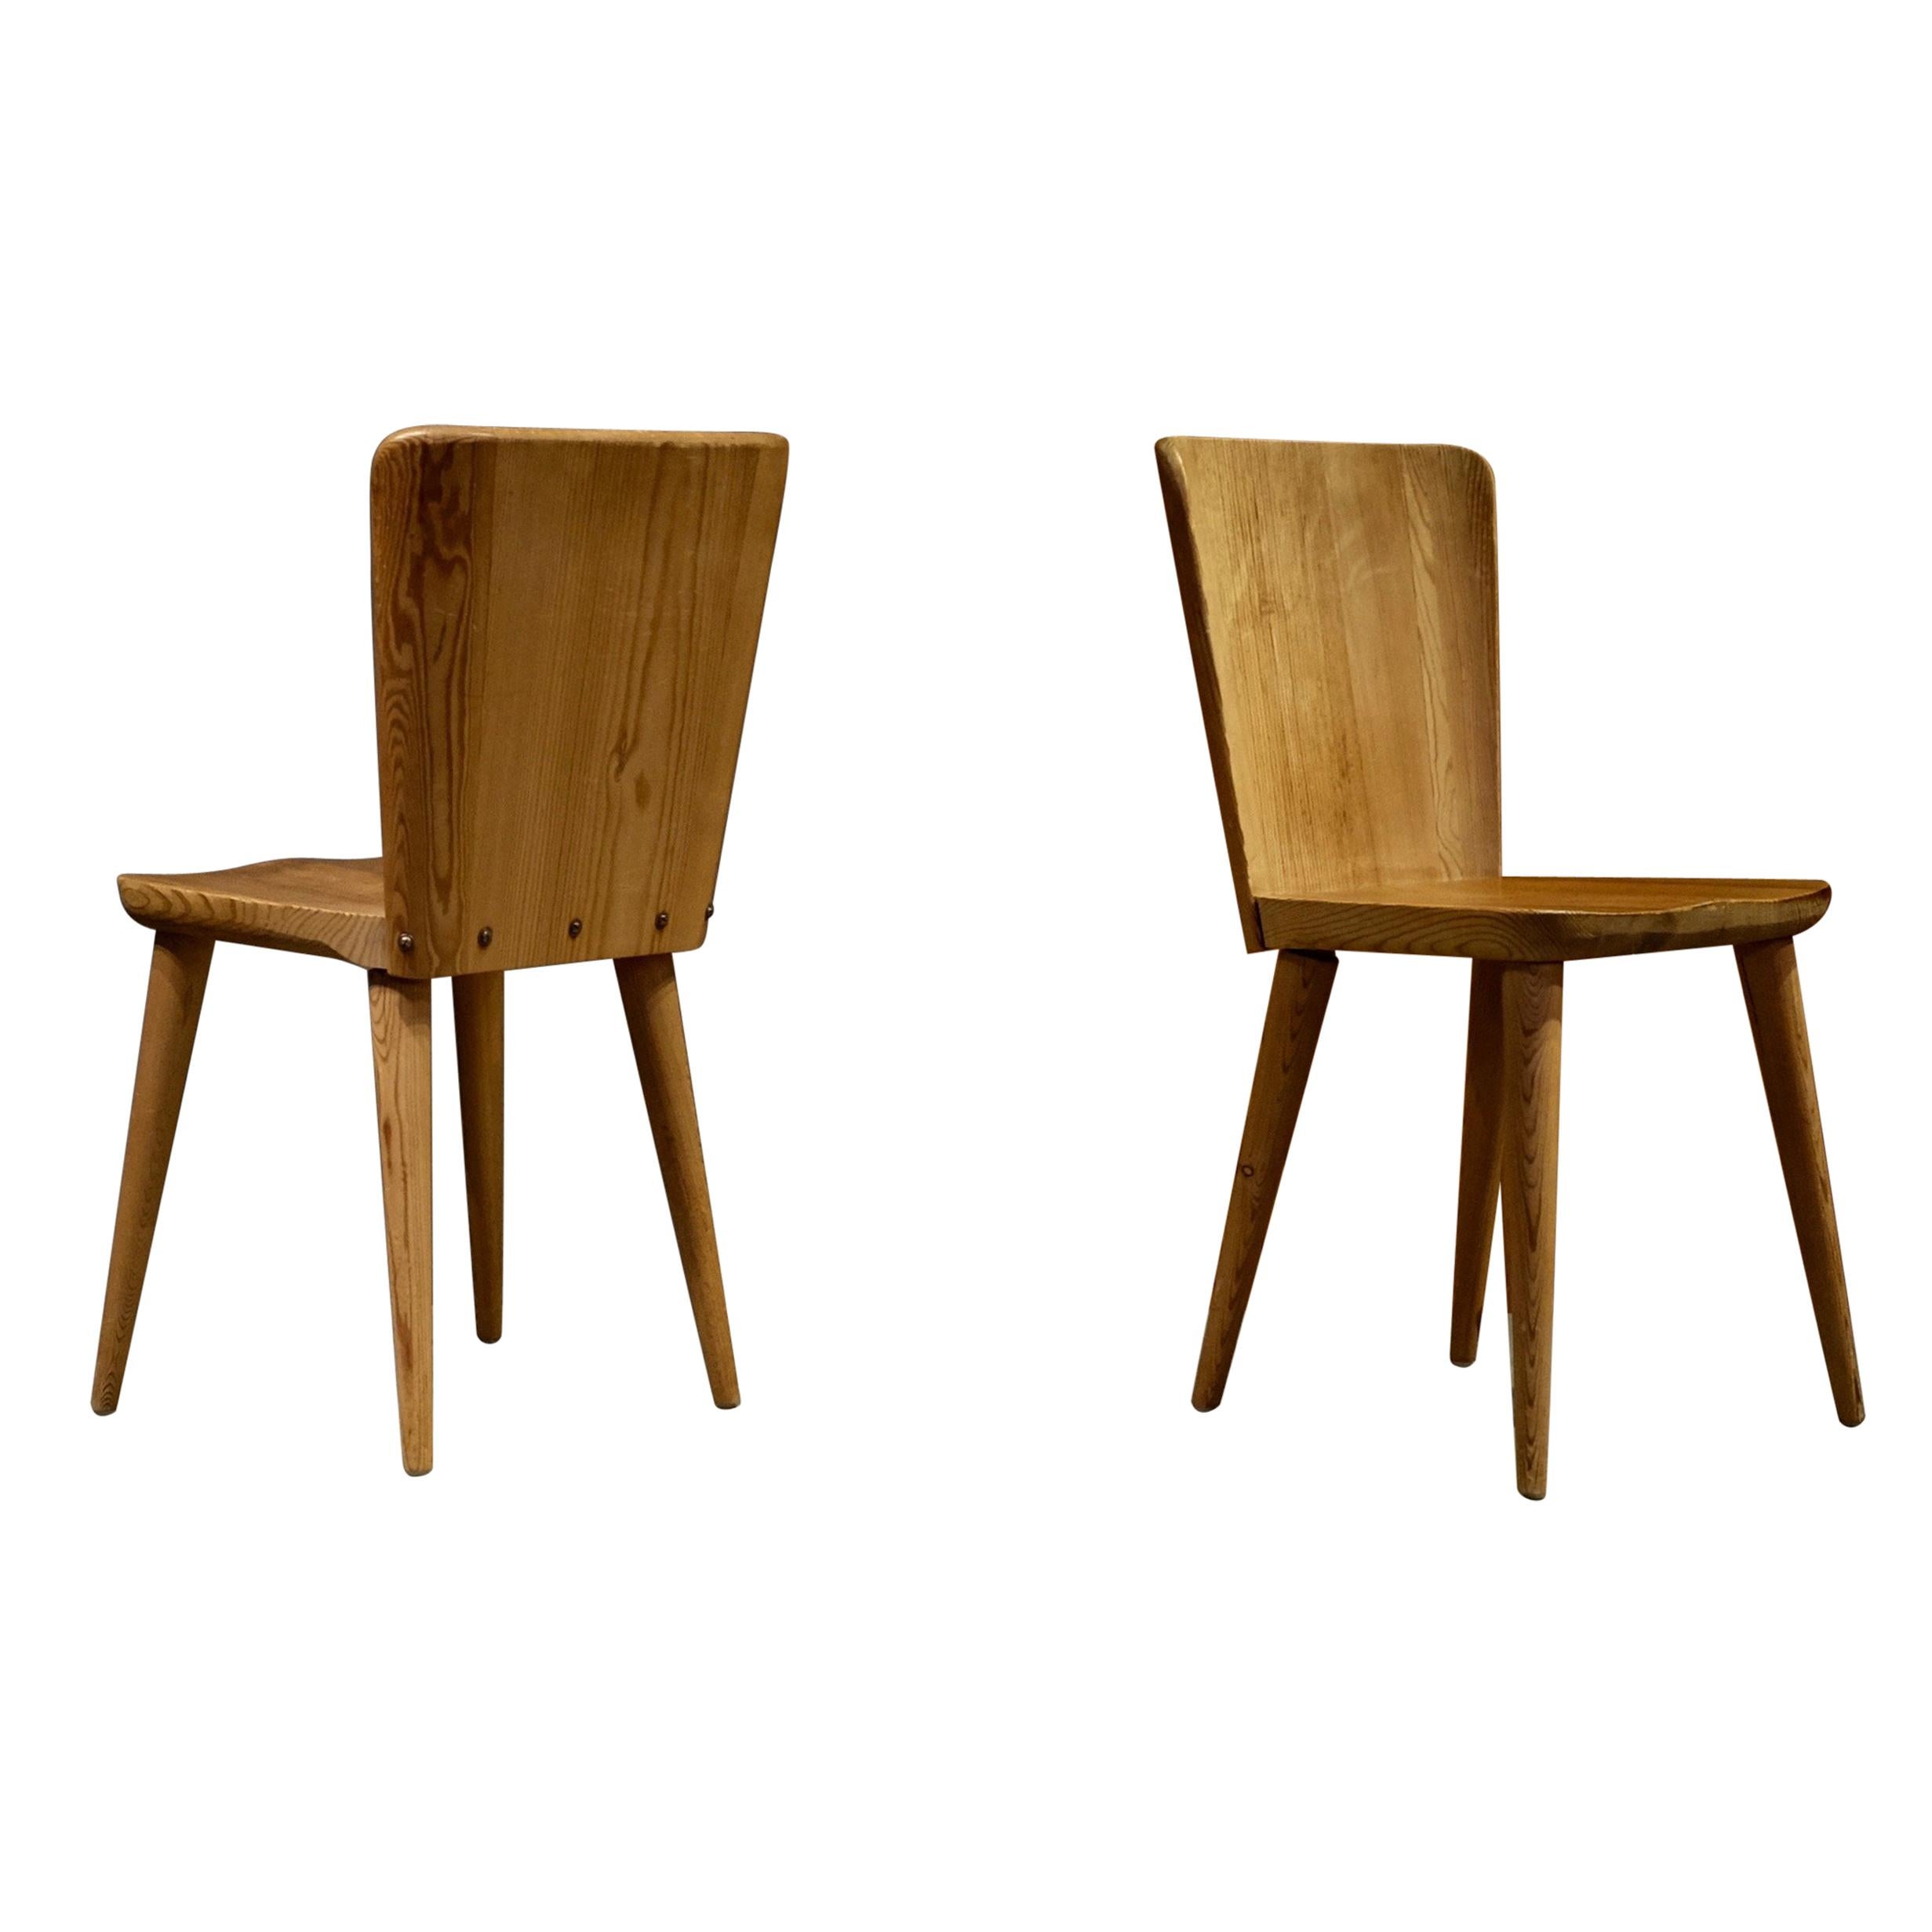 Set of 12 Swedish Pine Chairs by Göran Malmvall, Svensk Fur, 1940s